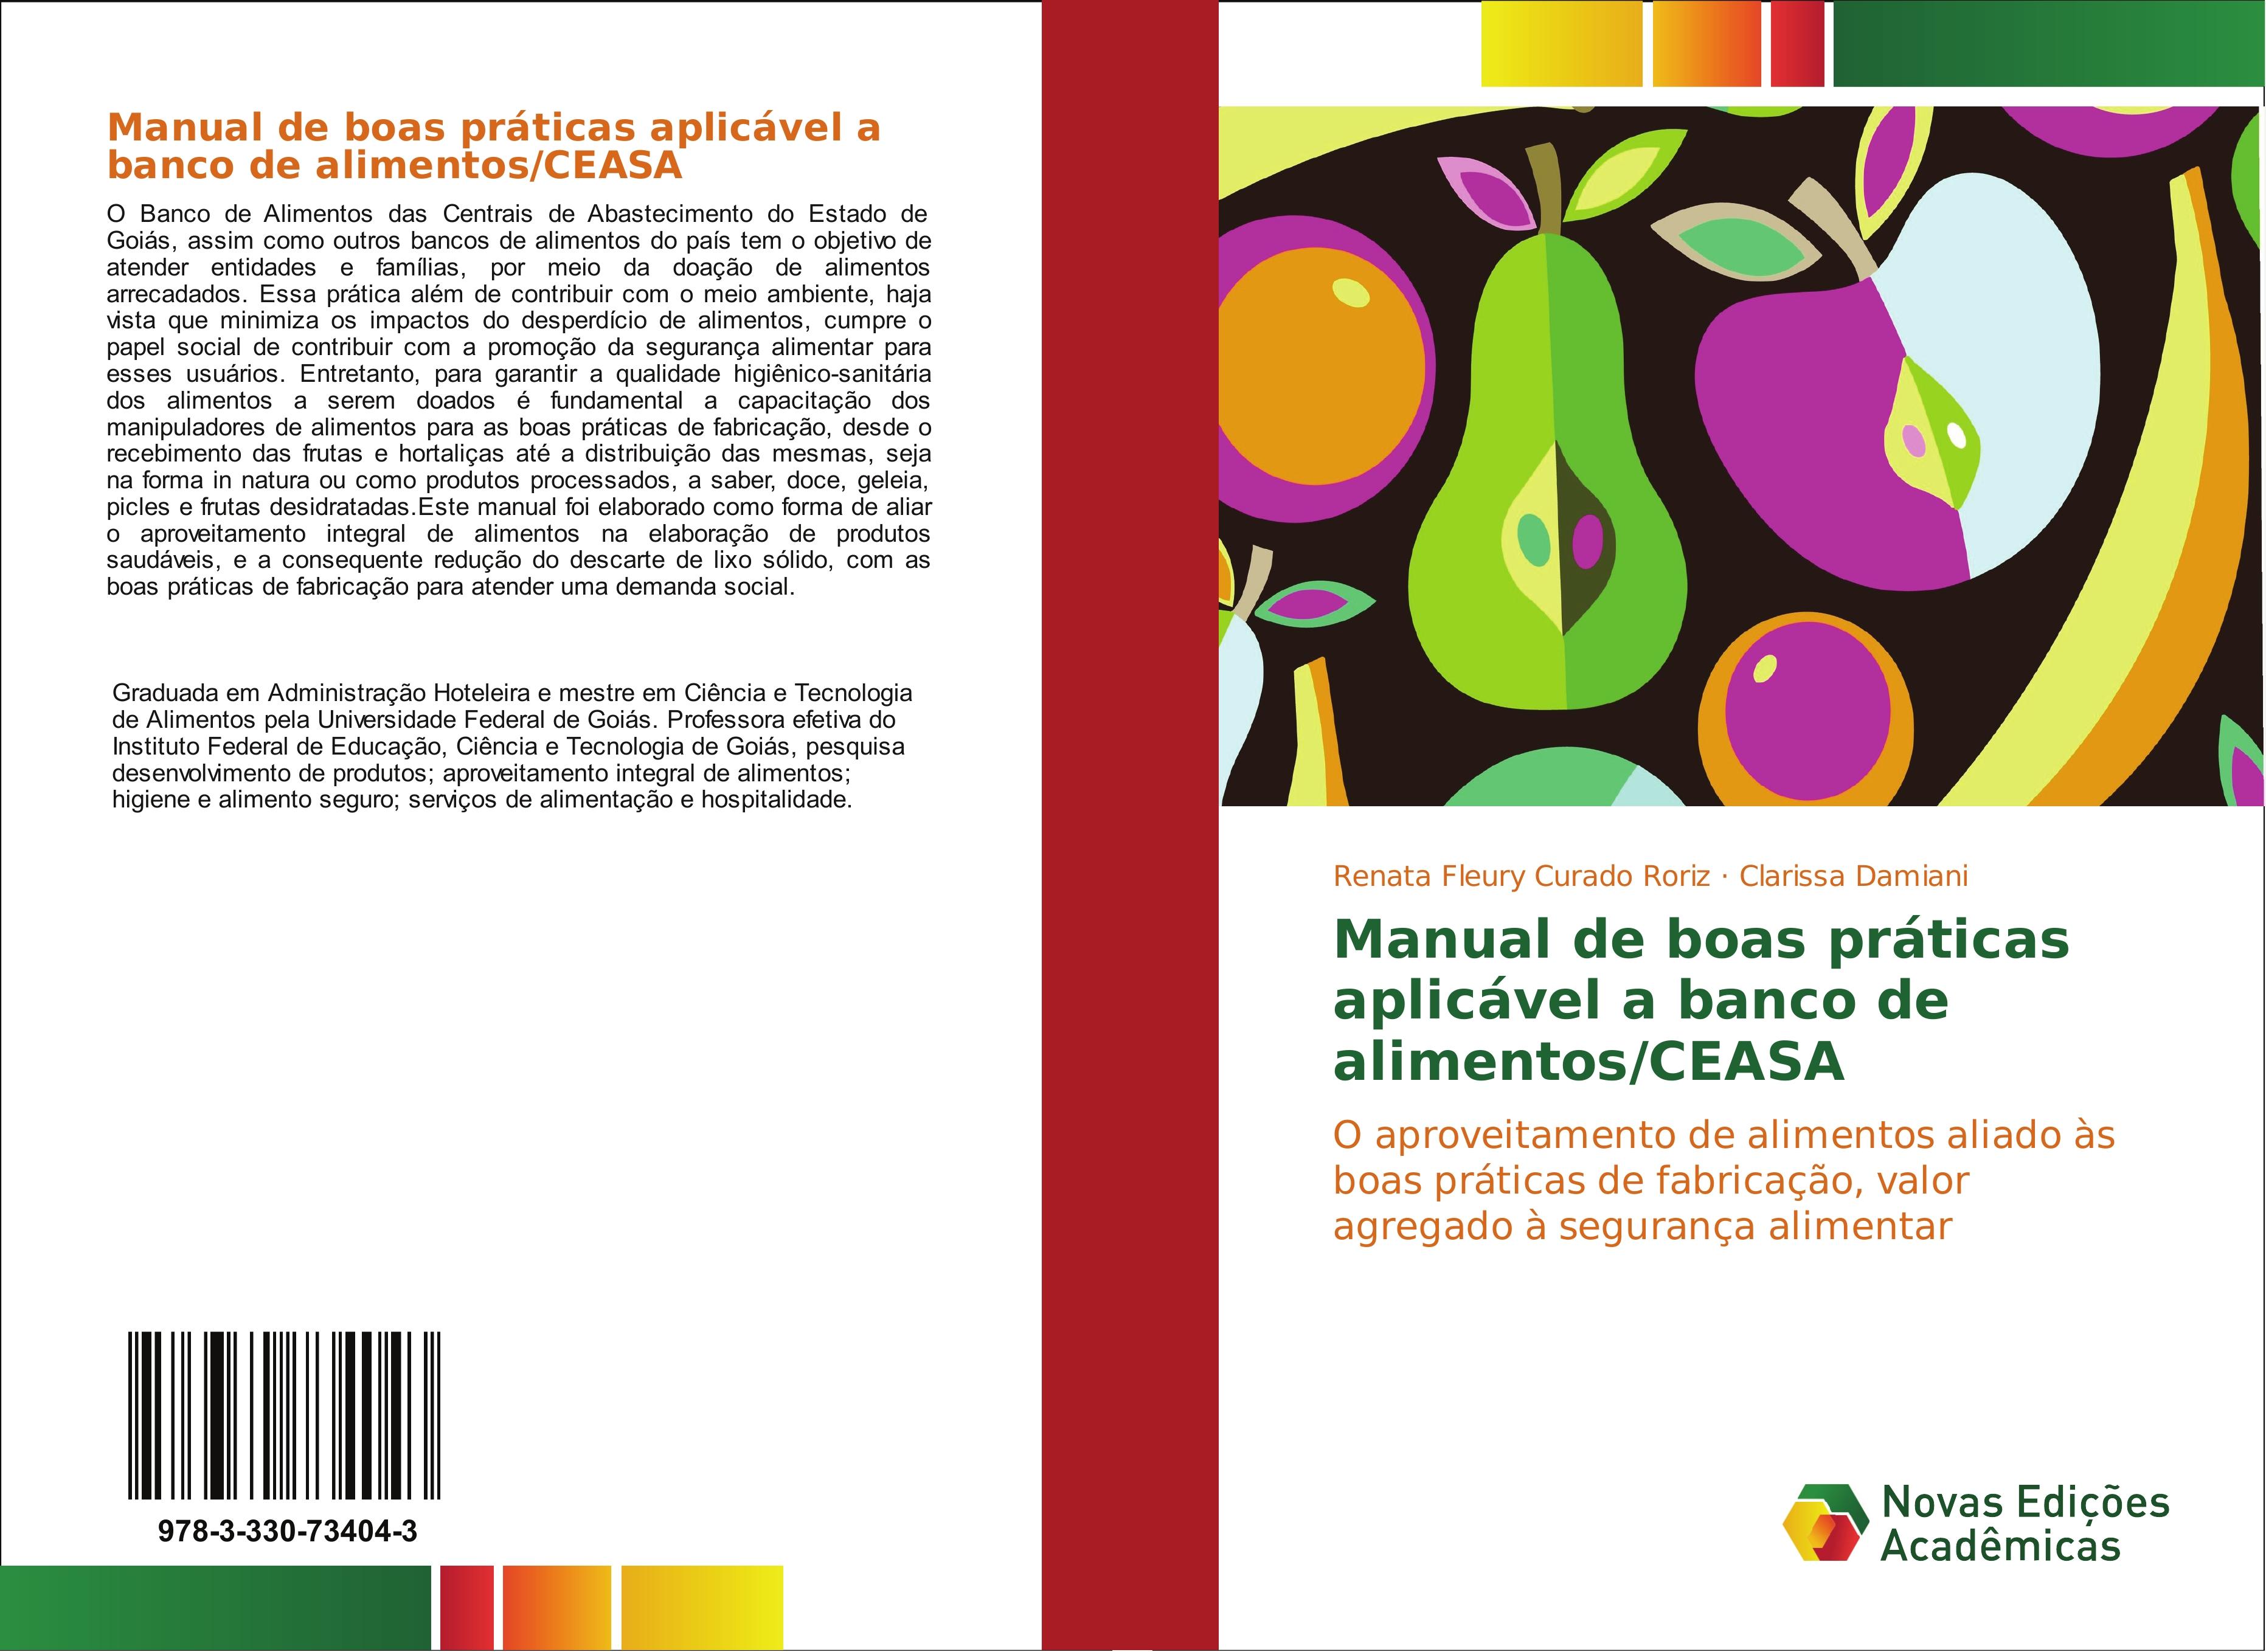 Manual de boas práticas aplicável a banco de alimentos/CEASA - Renata Fleury Curado Roriz Clarissa Damiani